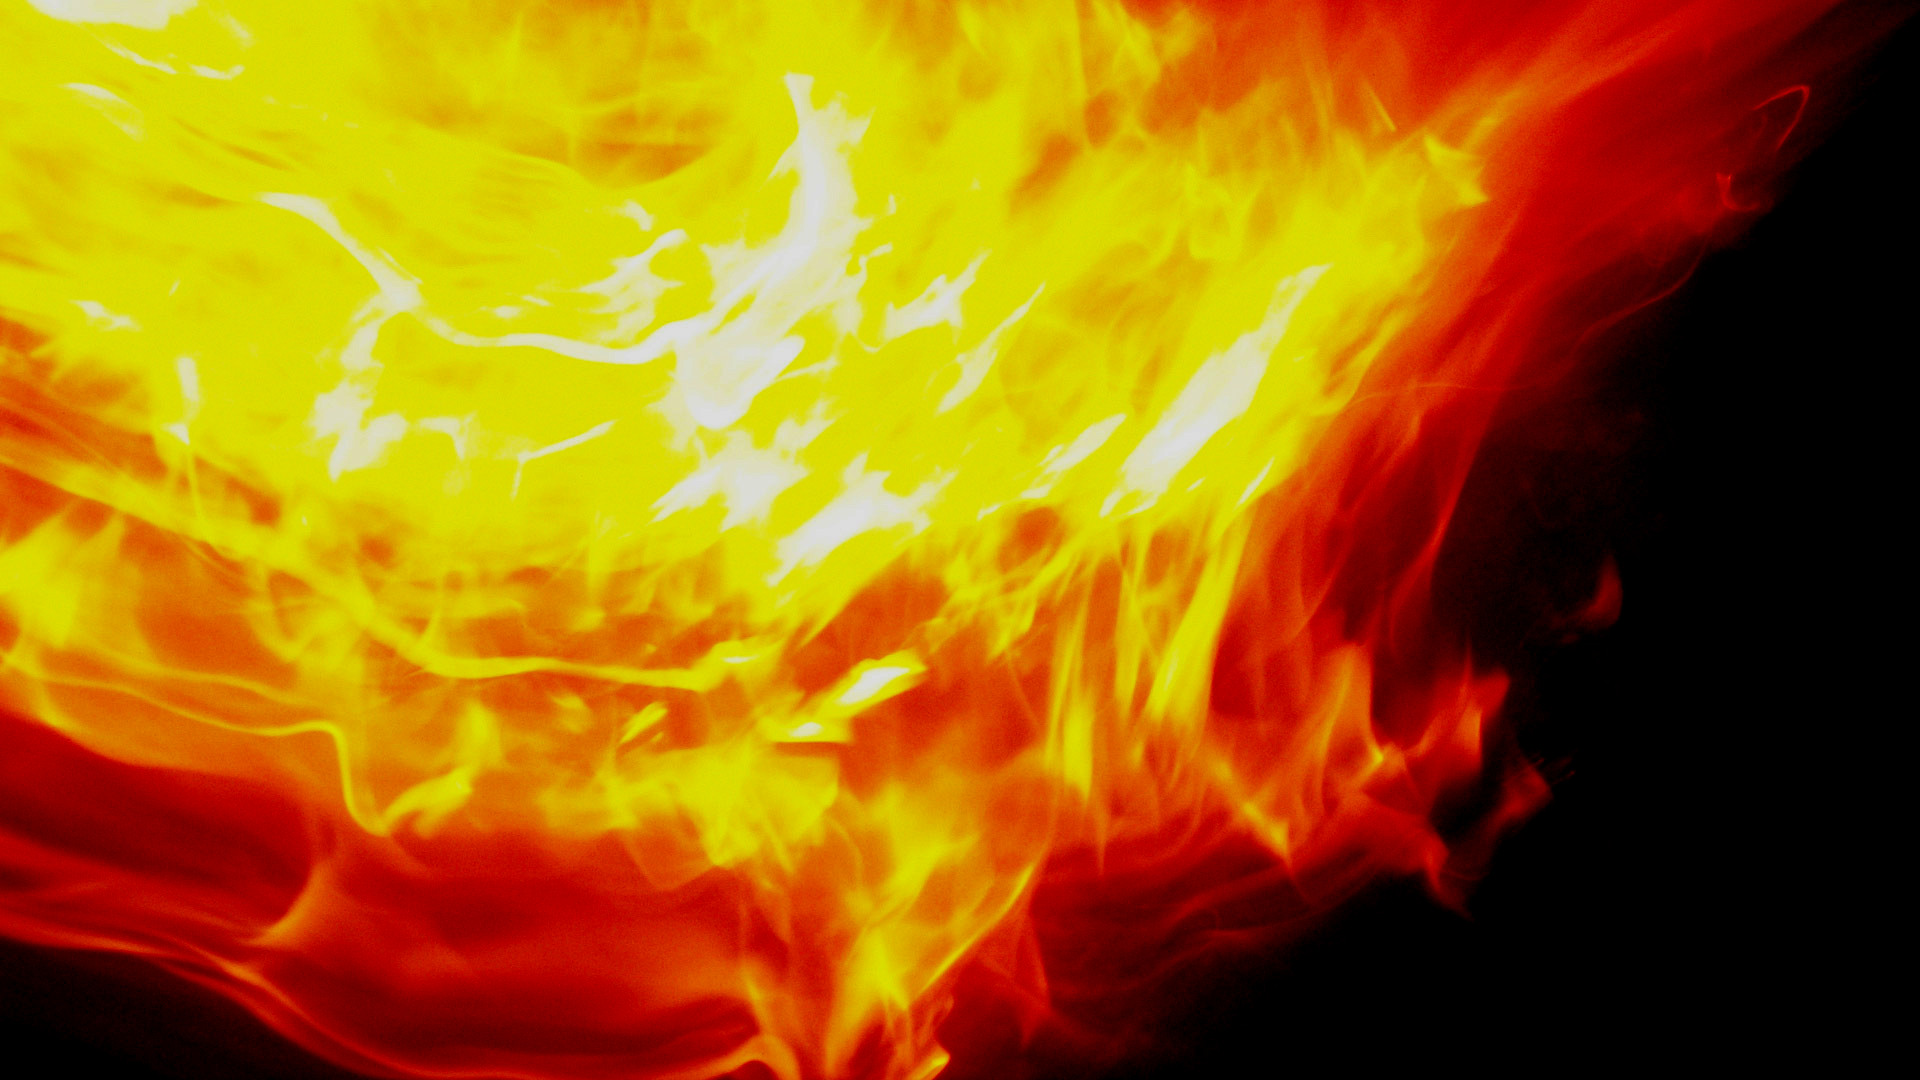 Flames 1920x1080p HD Fire Wallpaper